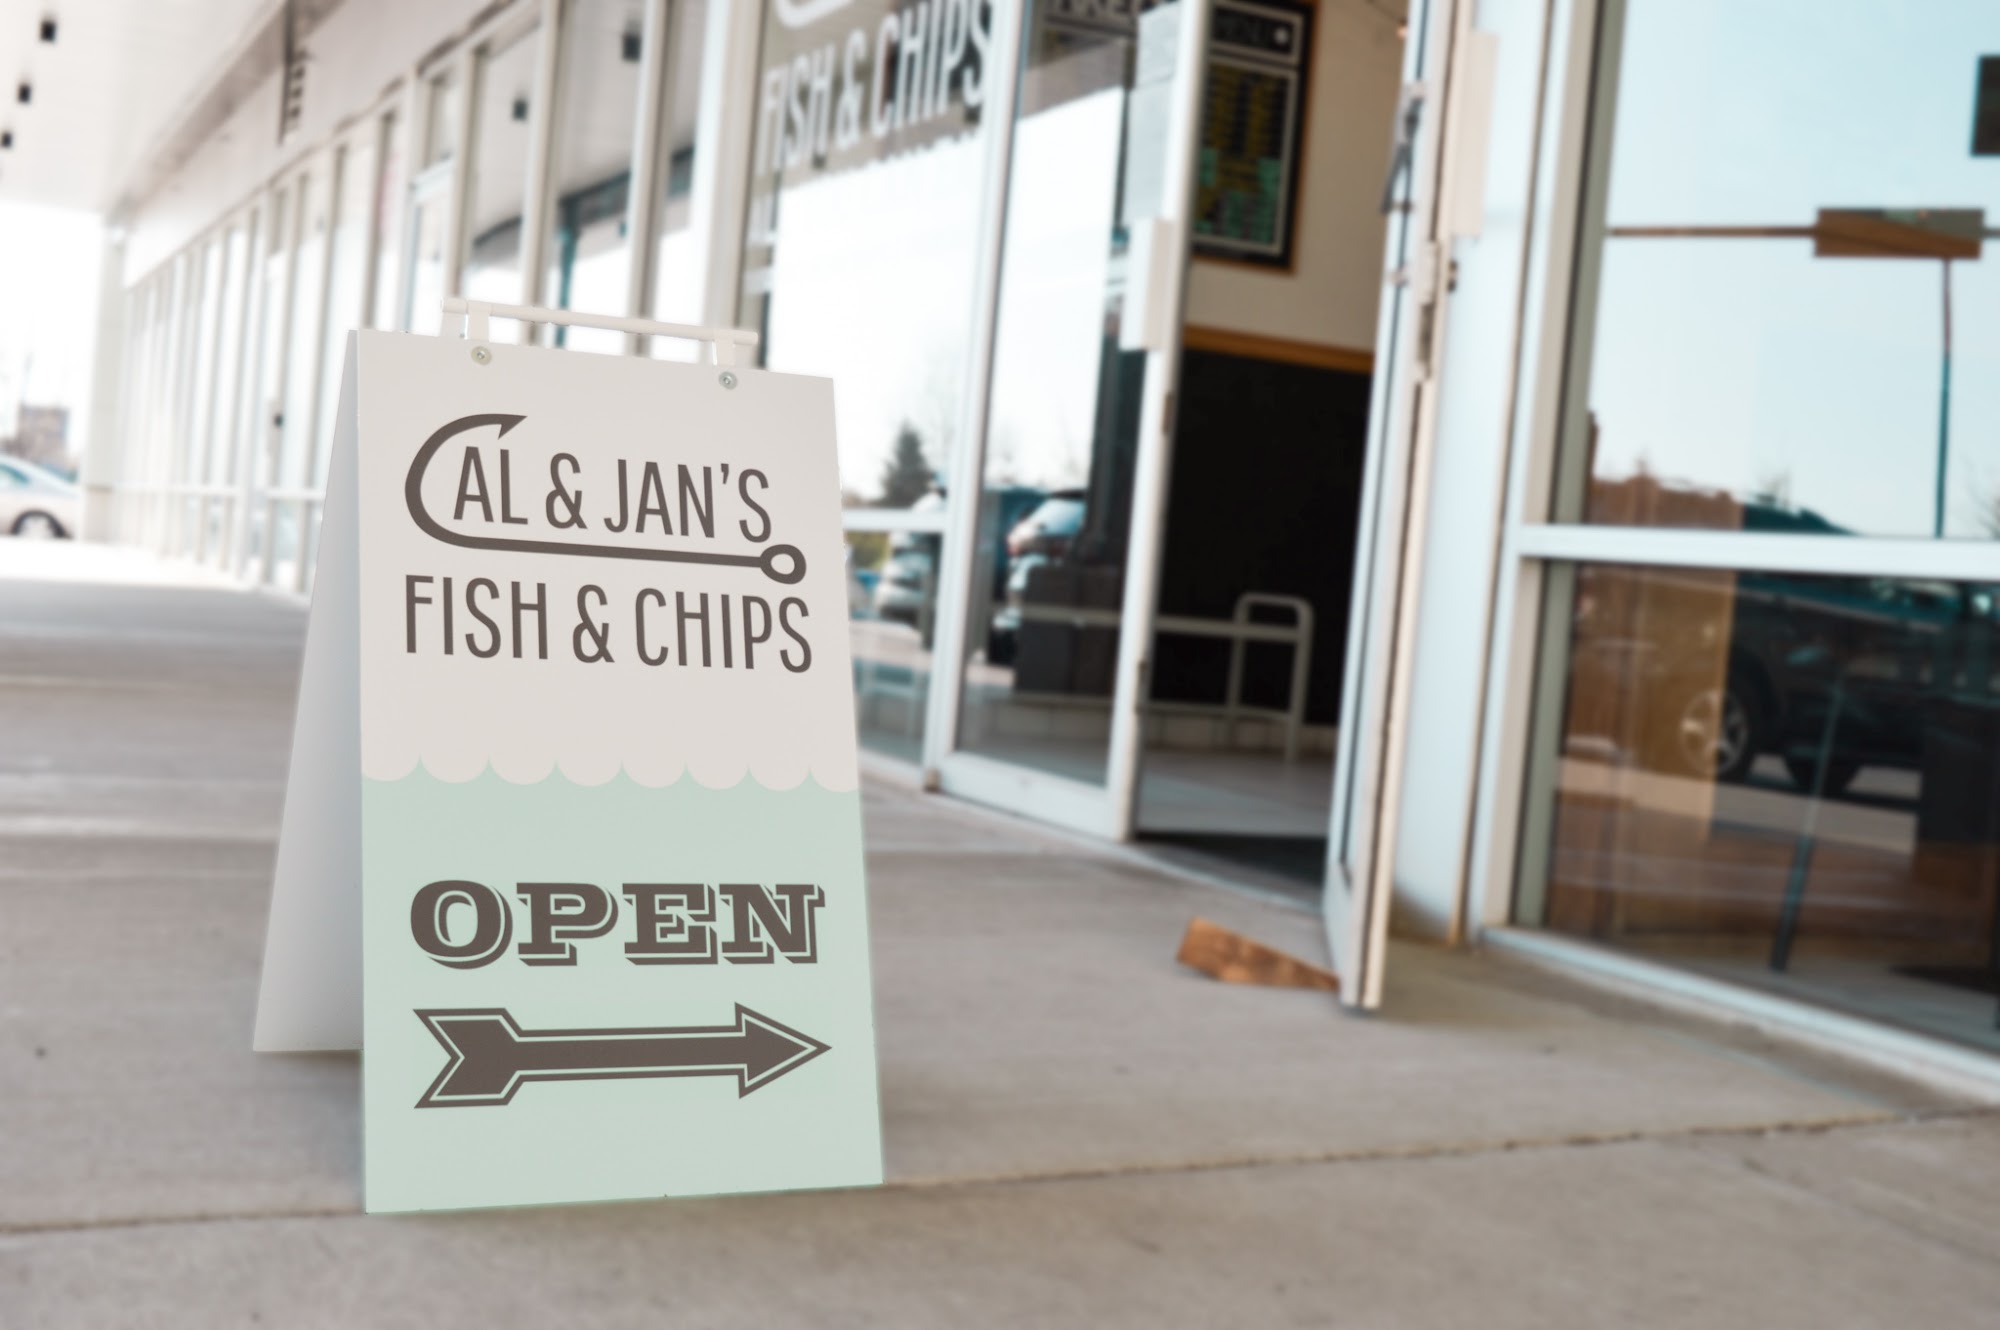 Al & Jan's Fish & Chips